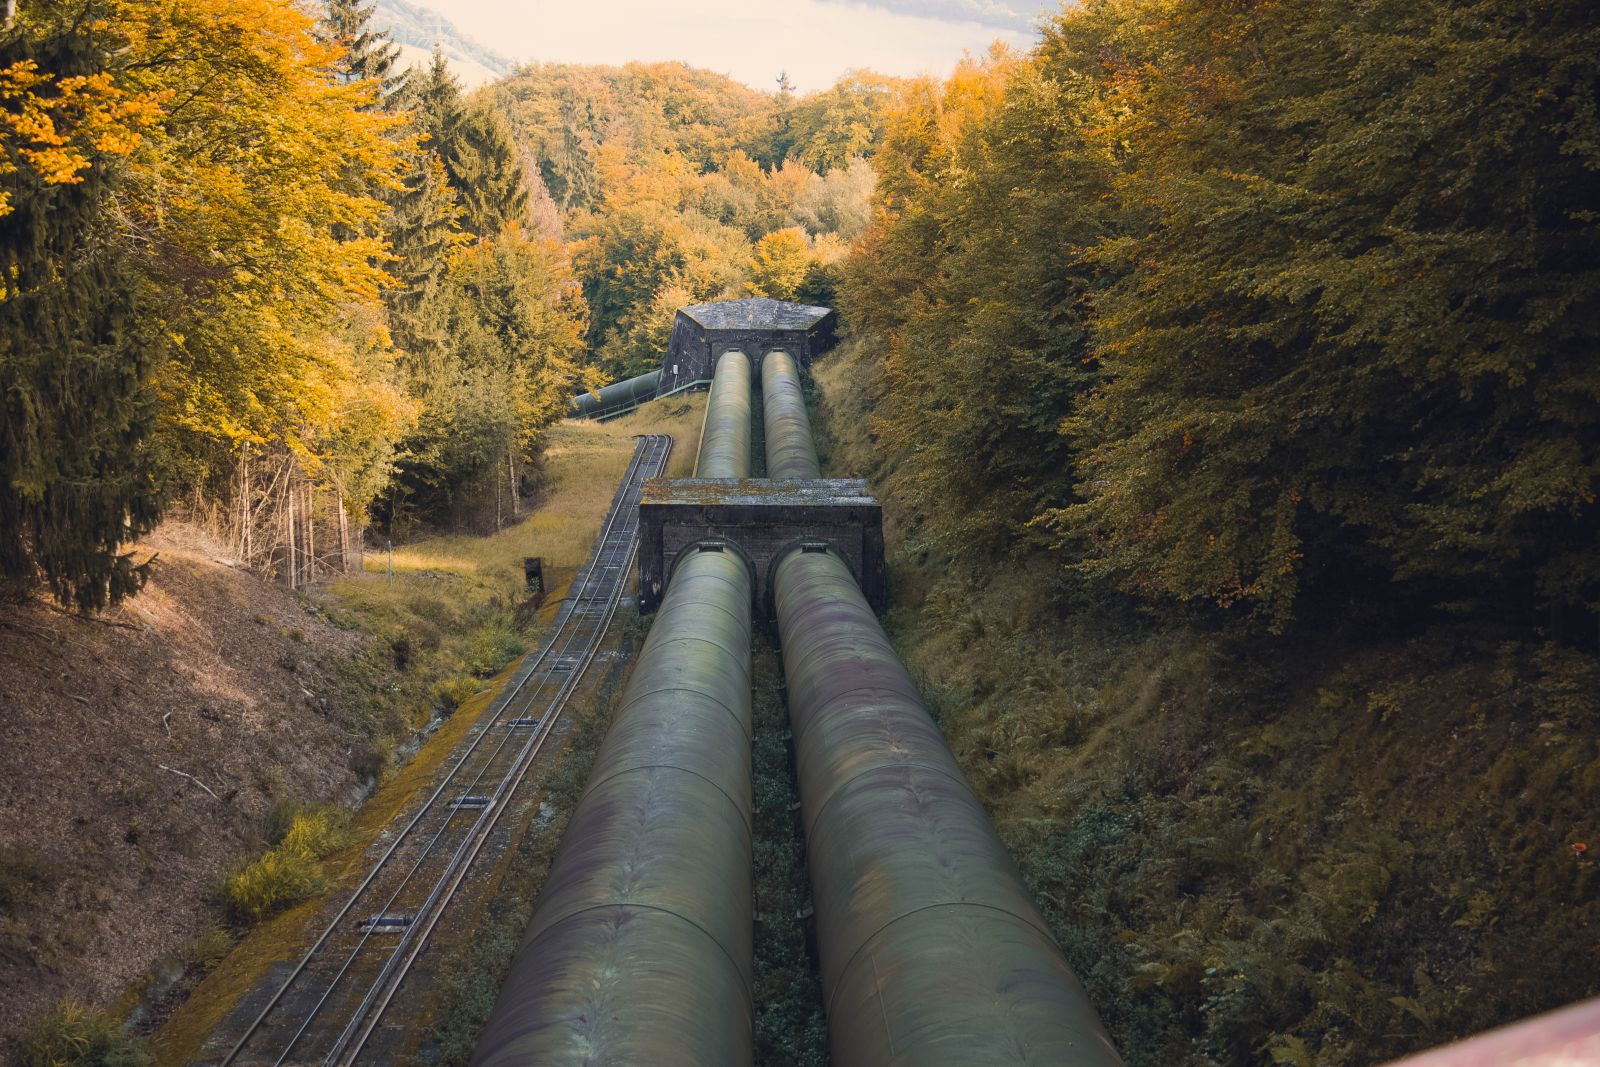 Oil - Oil Pipeline through forest